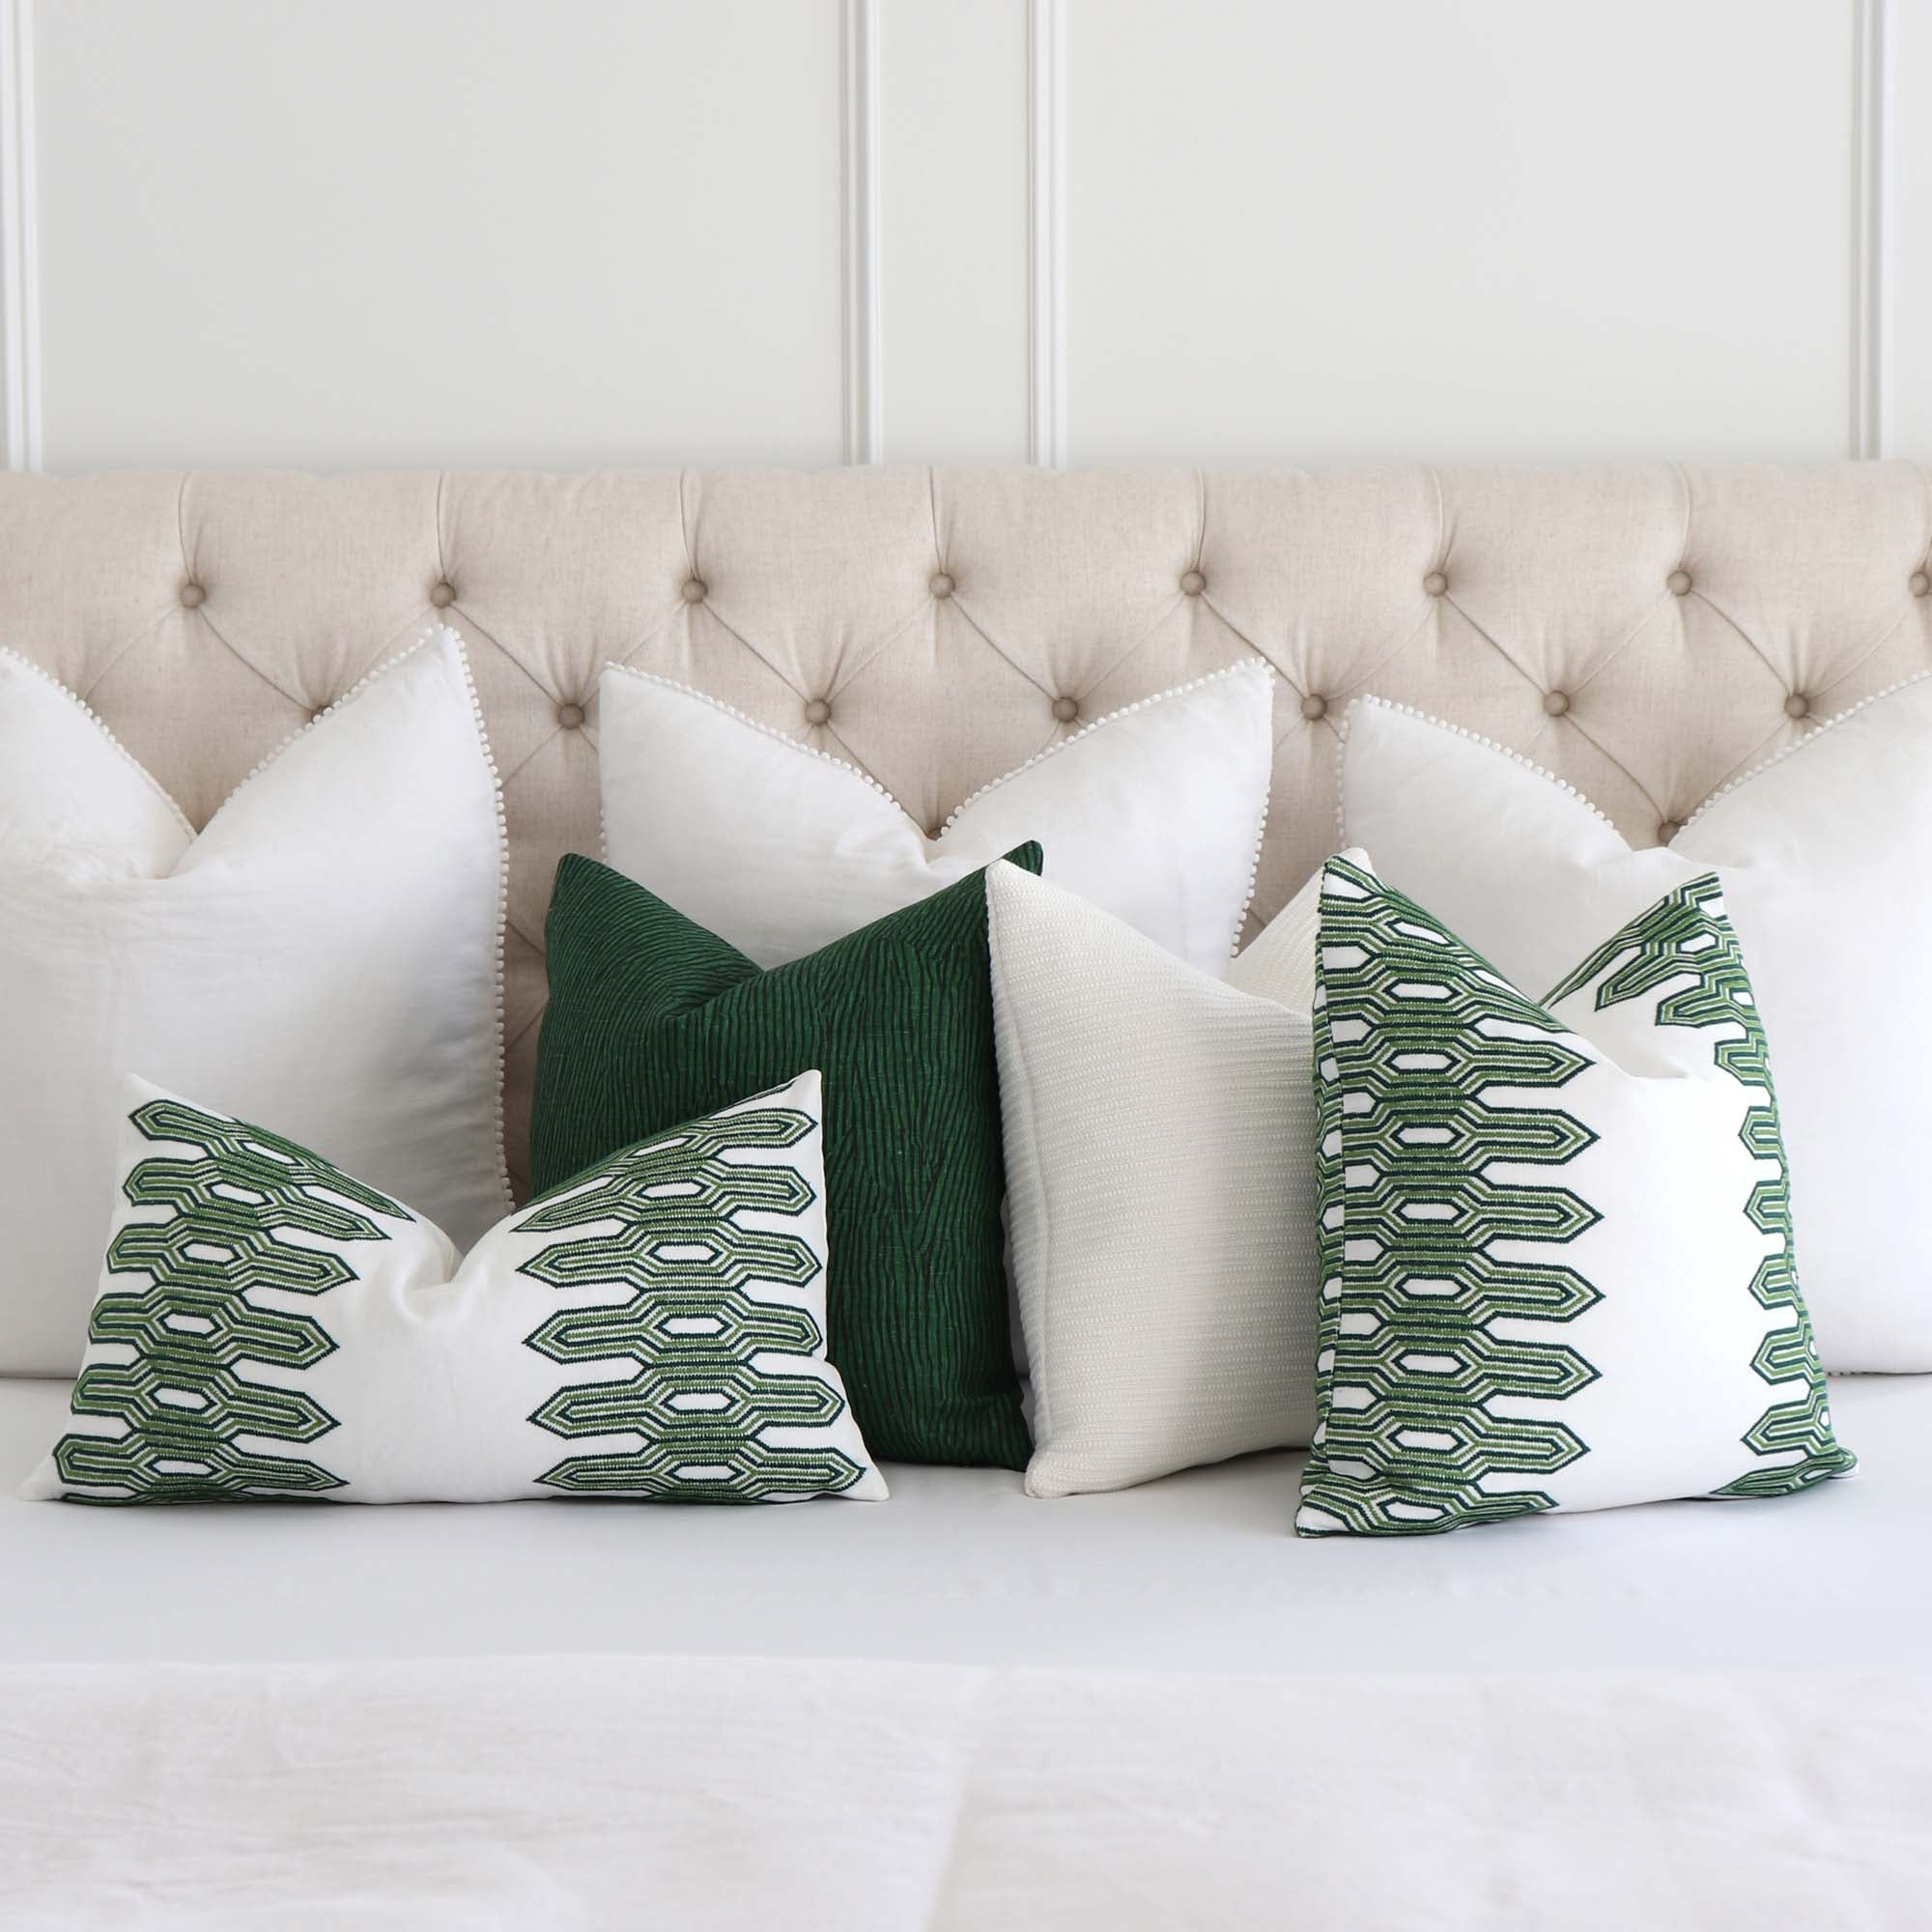 20 Creative DIY Pillow Ideas — Sugar & Cloth